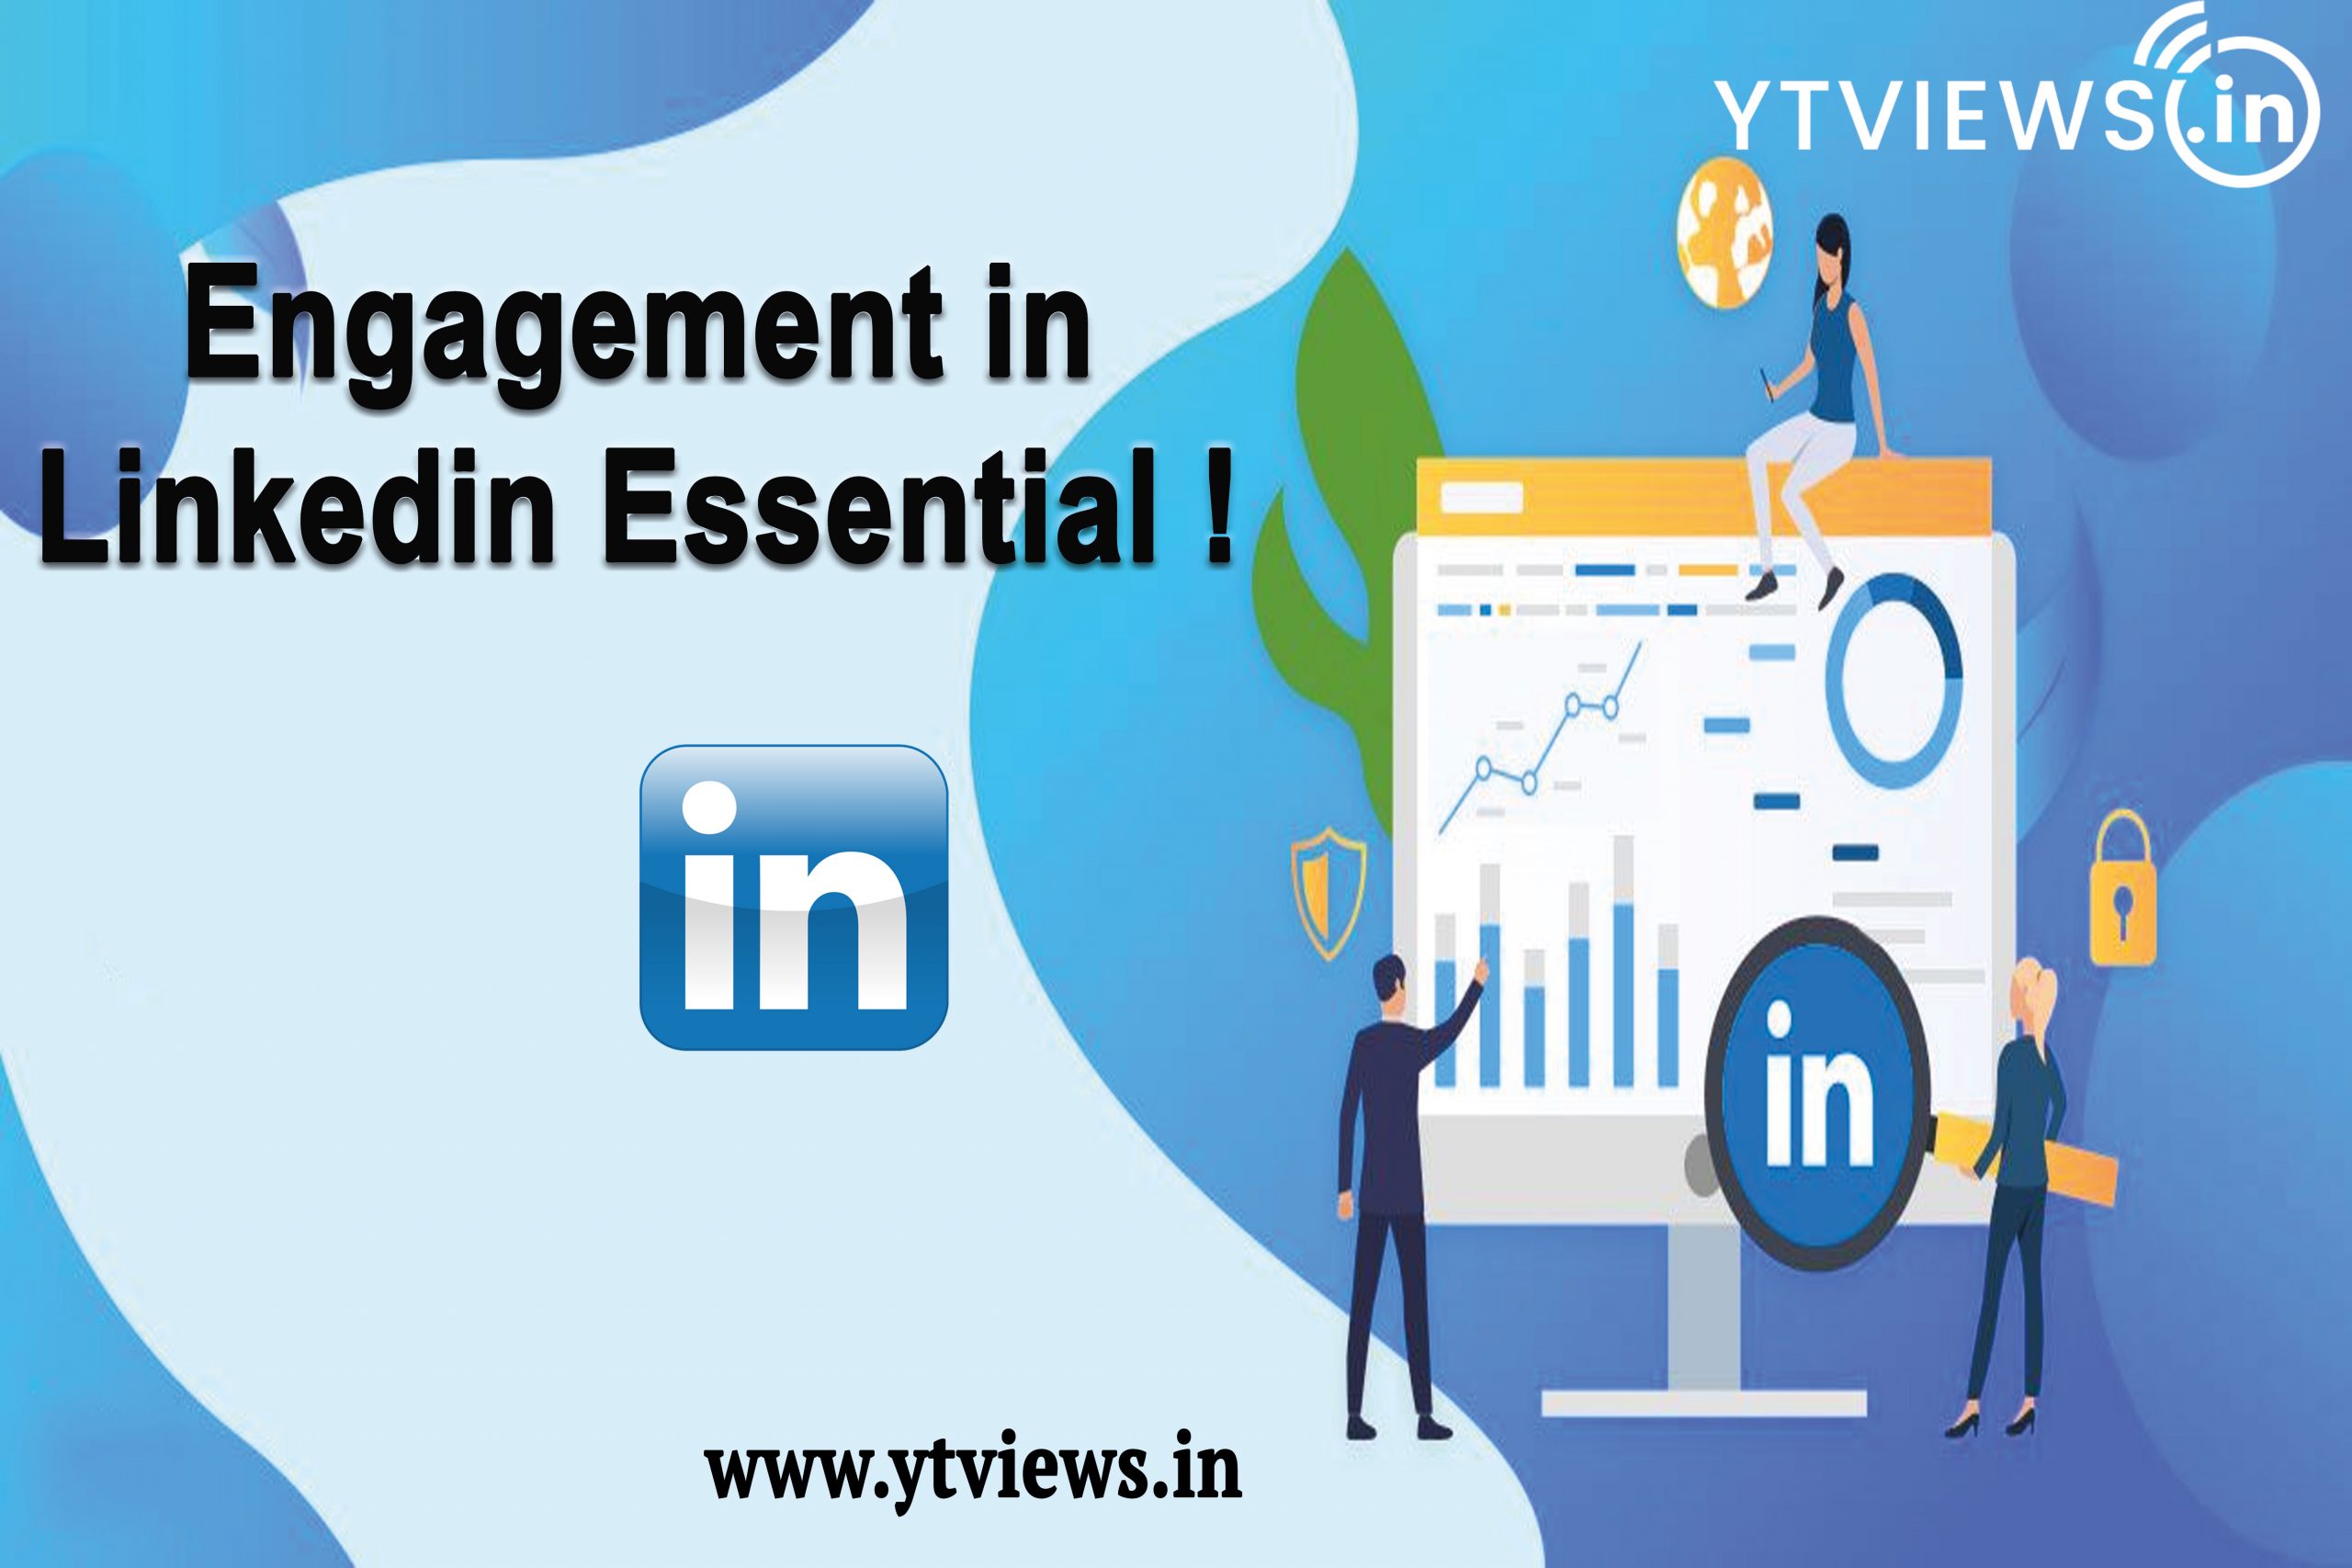 Engagement in LinkedIn essential!